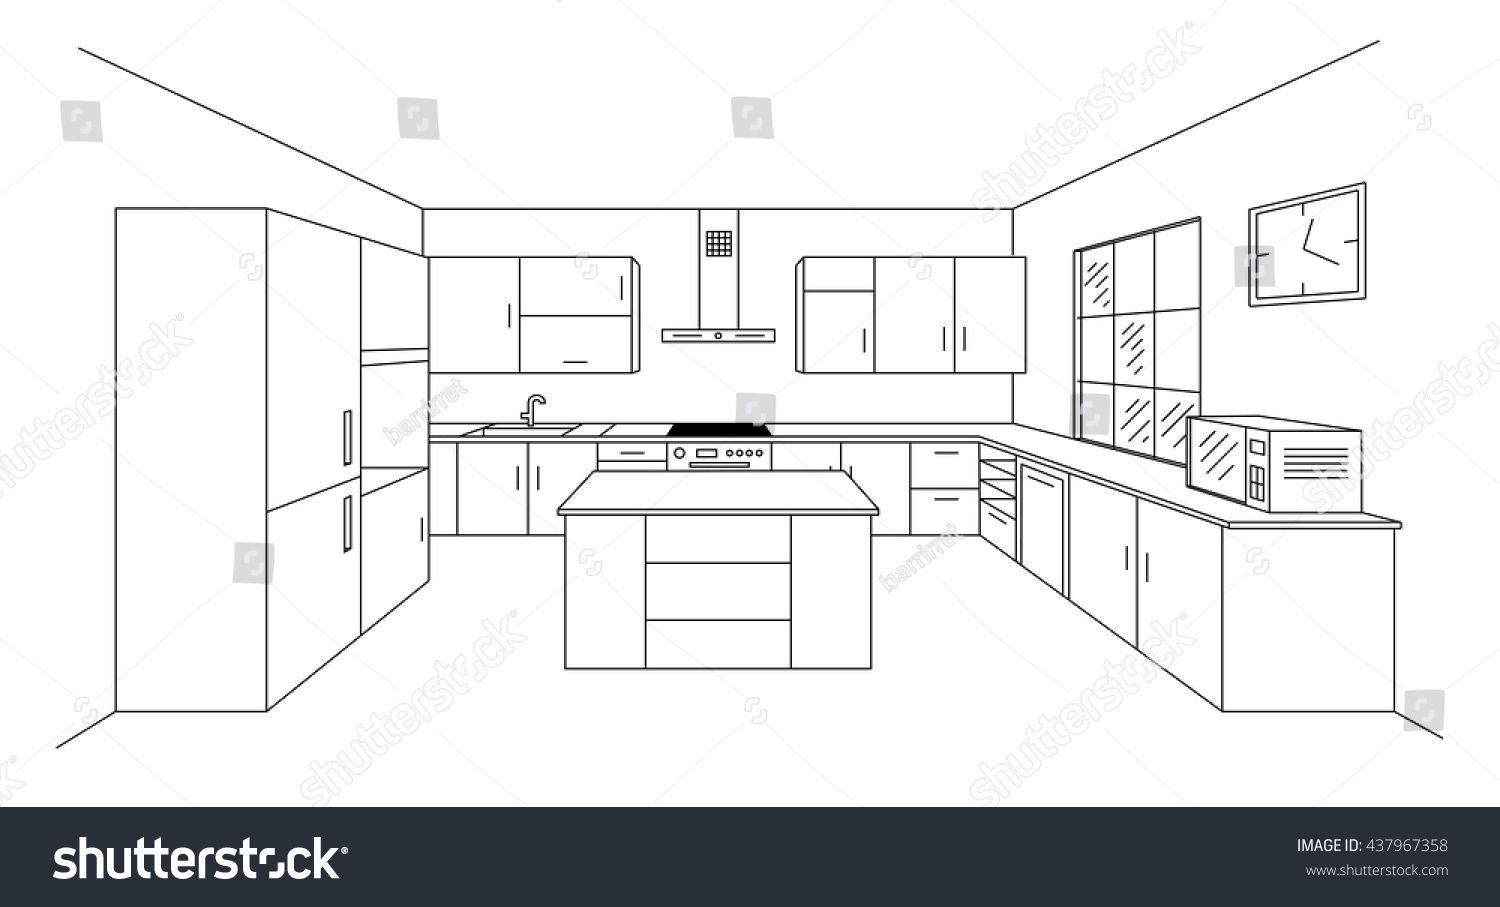 Kitchen Design Drawing 37 